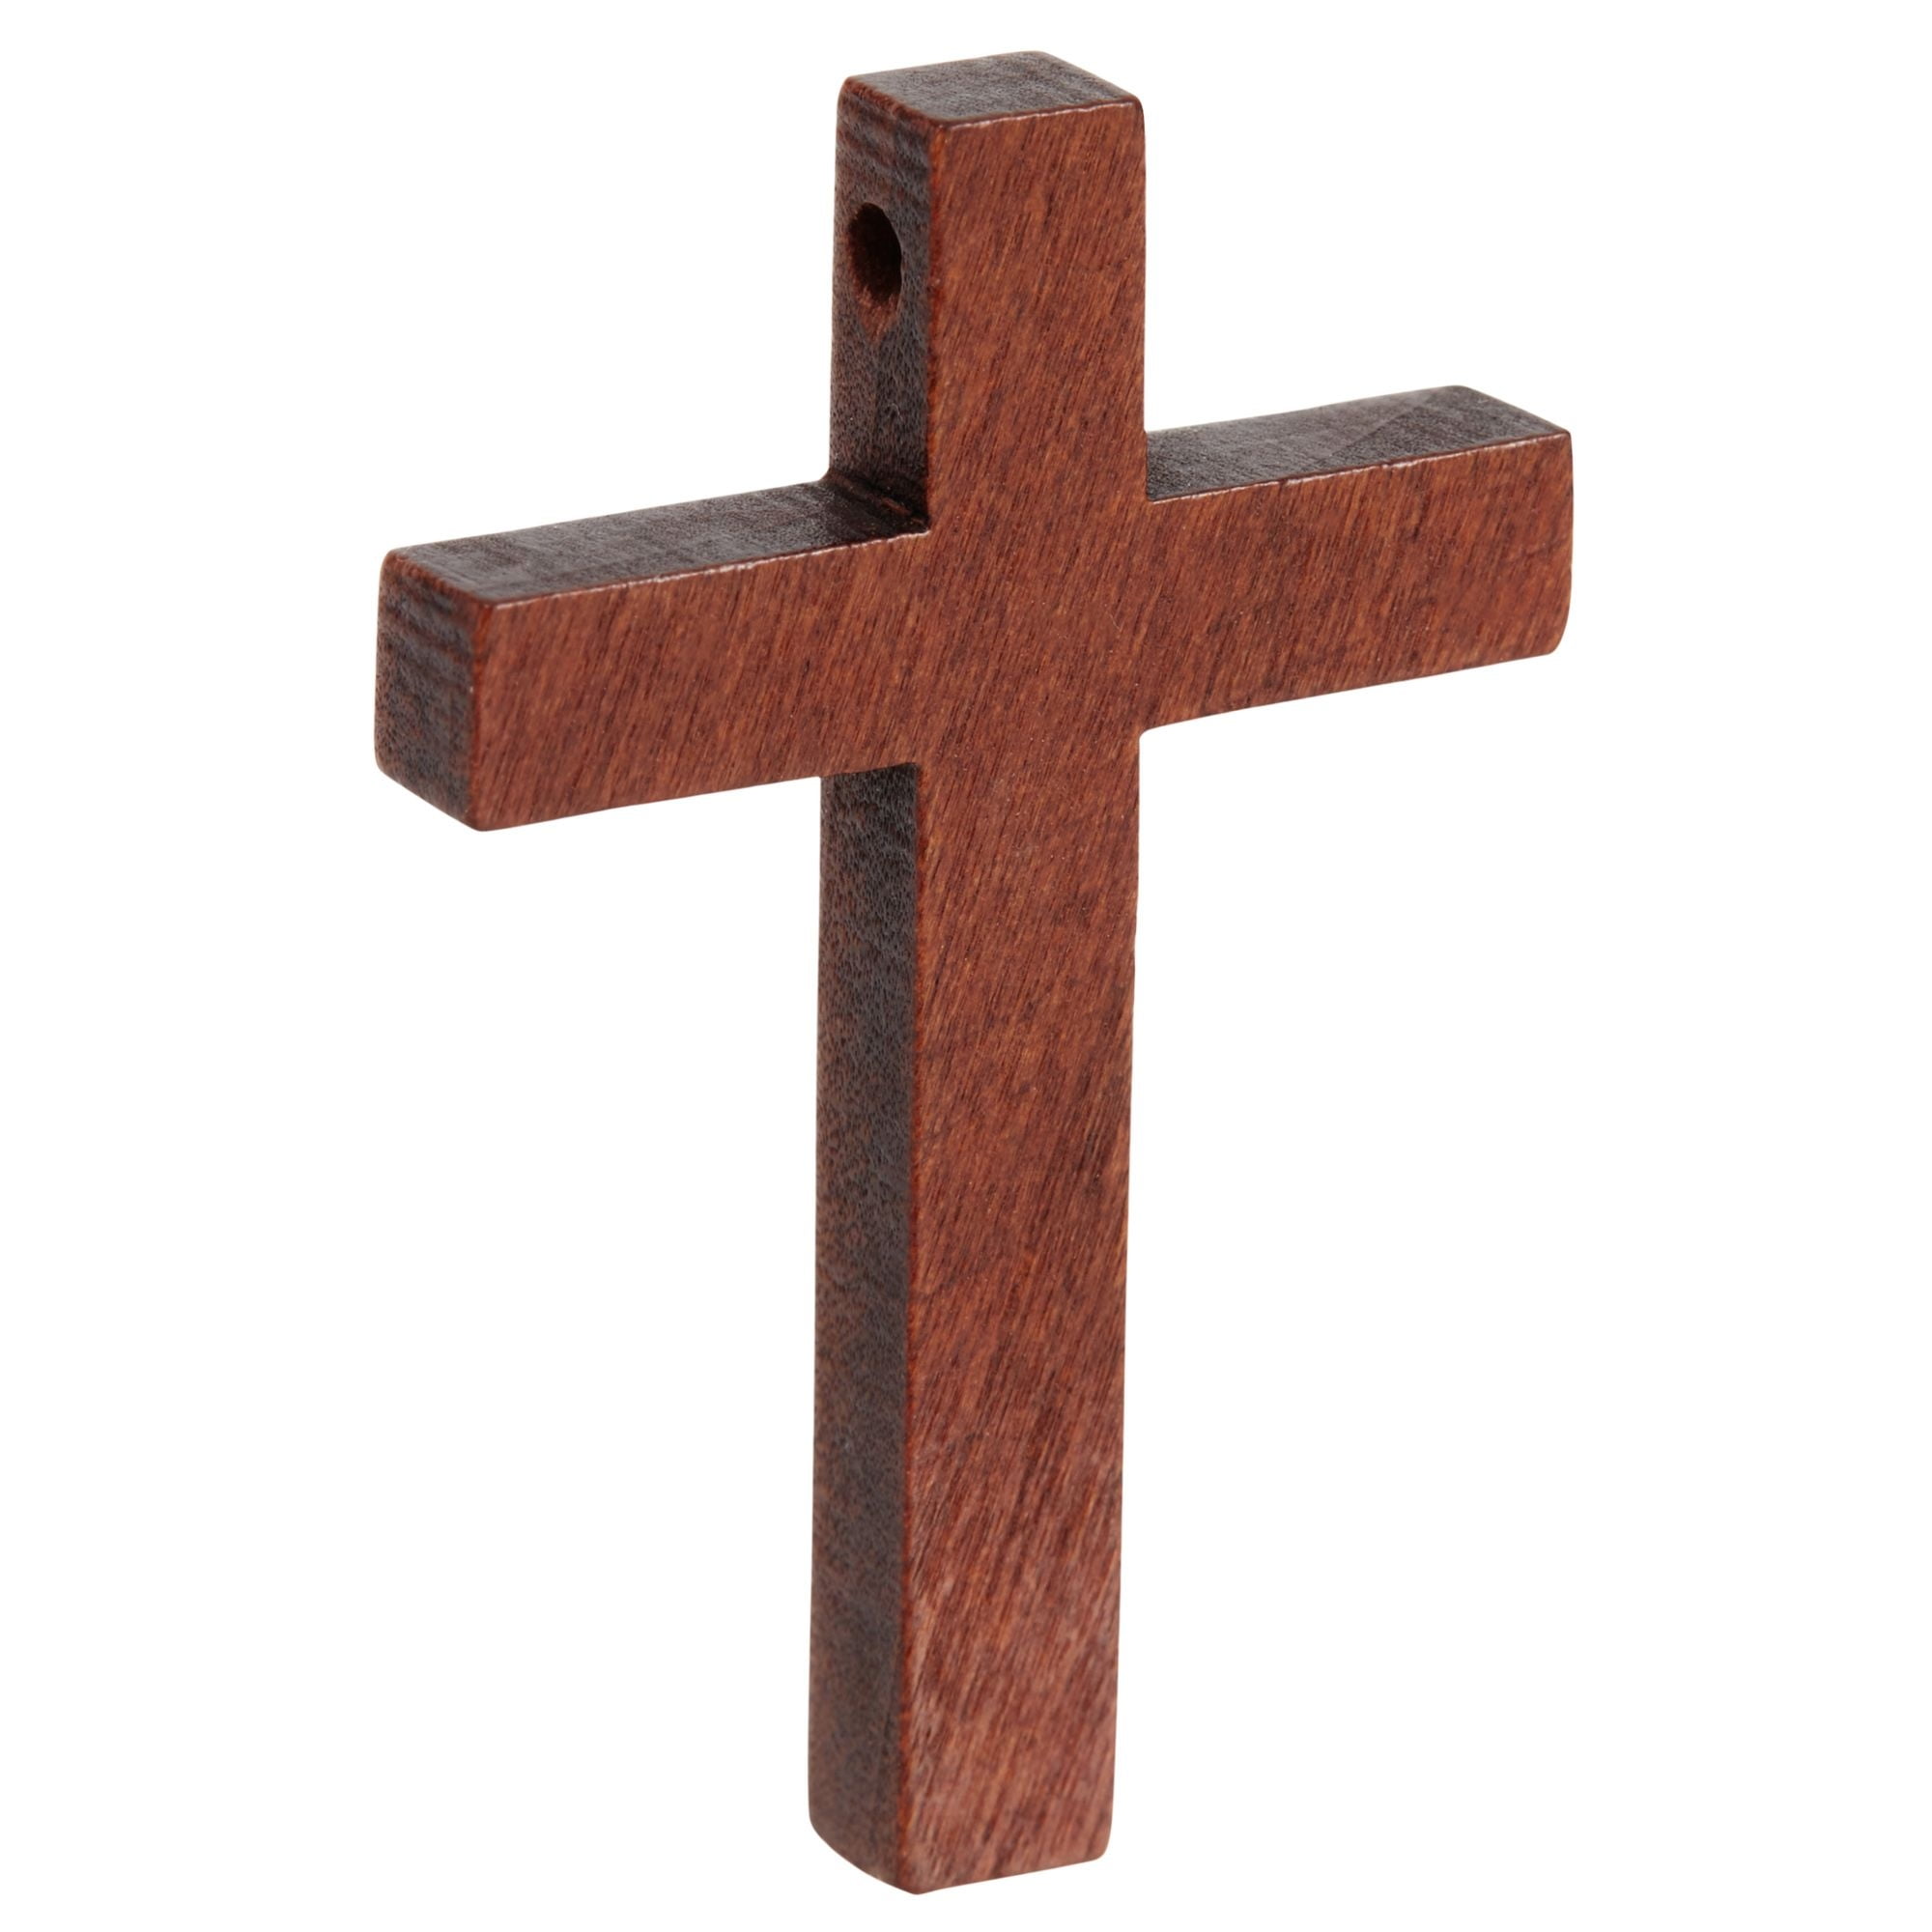 Sasylvia Wooden Cross Charm Bulk Small Cross Charm for Craft Mini Wood Cross Pendant Christian Baptism Cross Party Favor for DIY Keychain Necklace